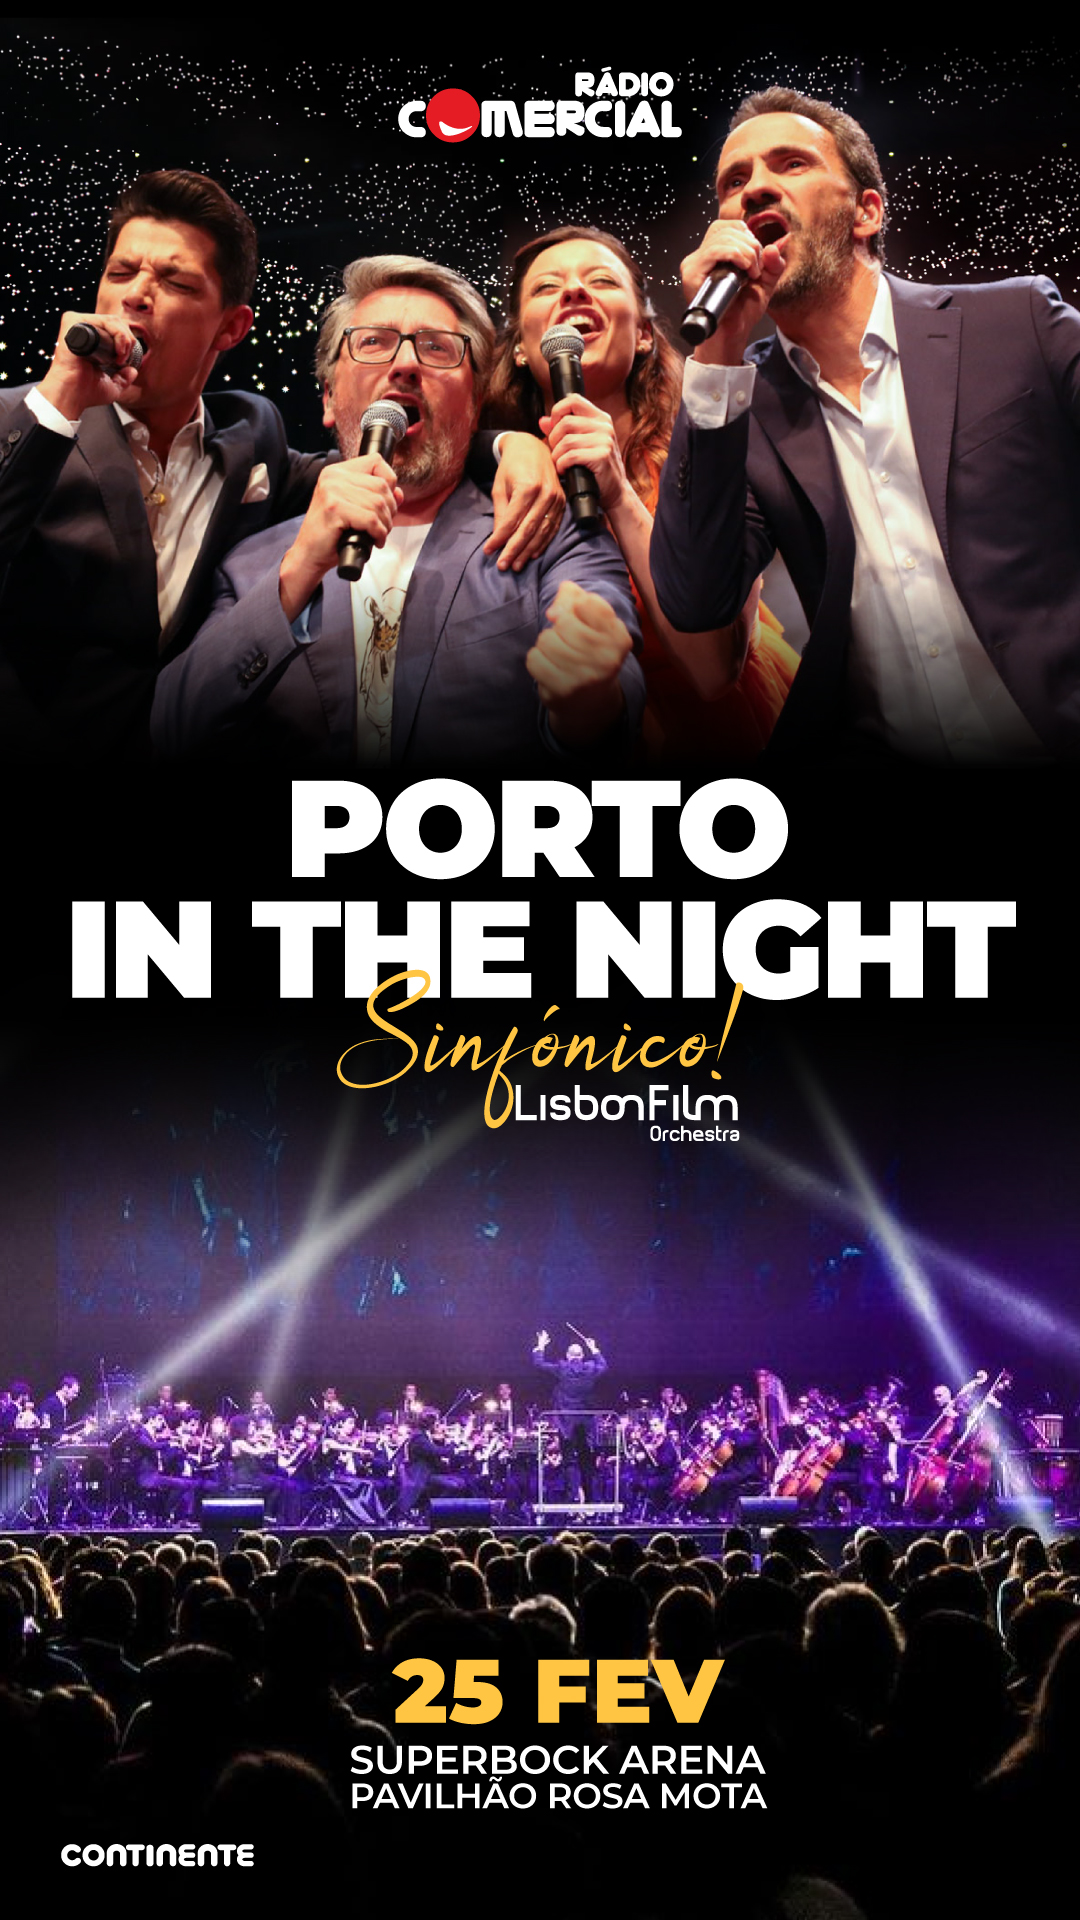 Porto in the night – sinfónico - Event